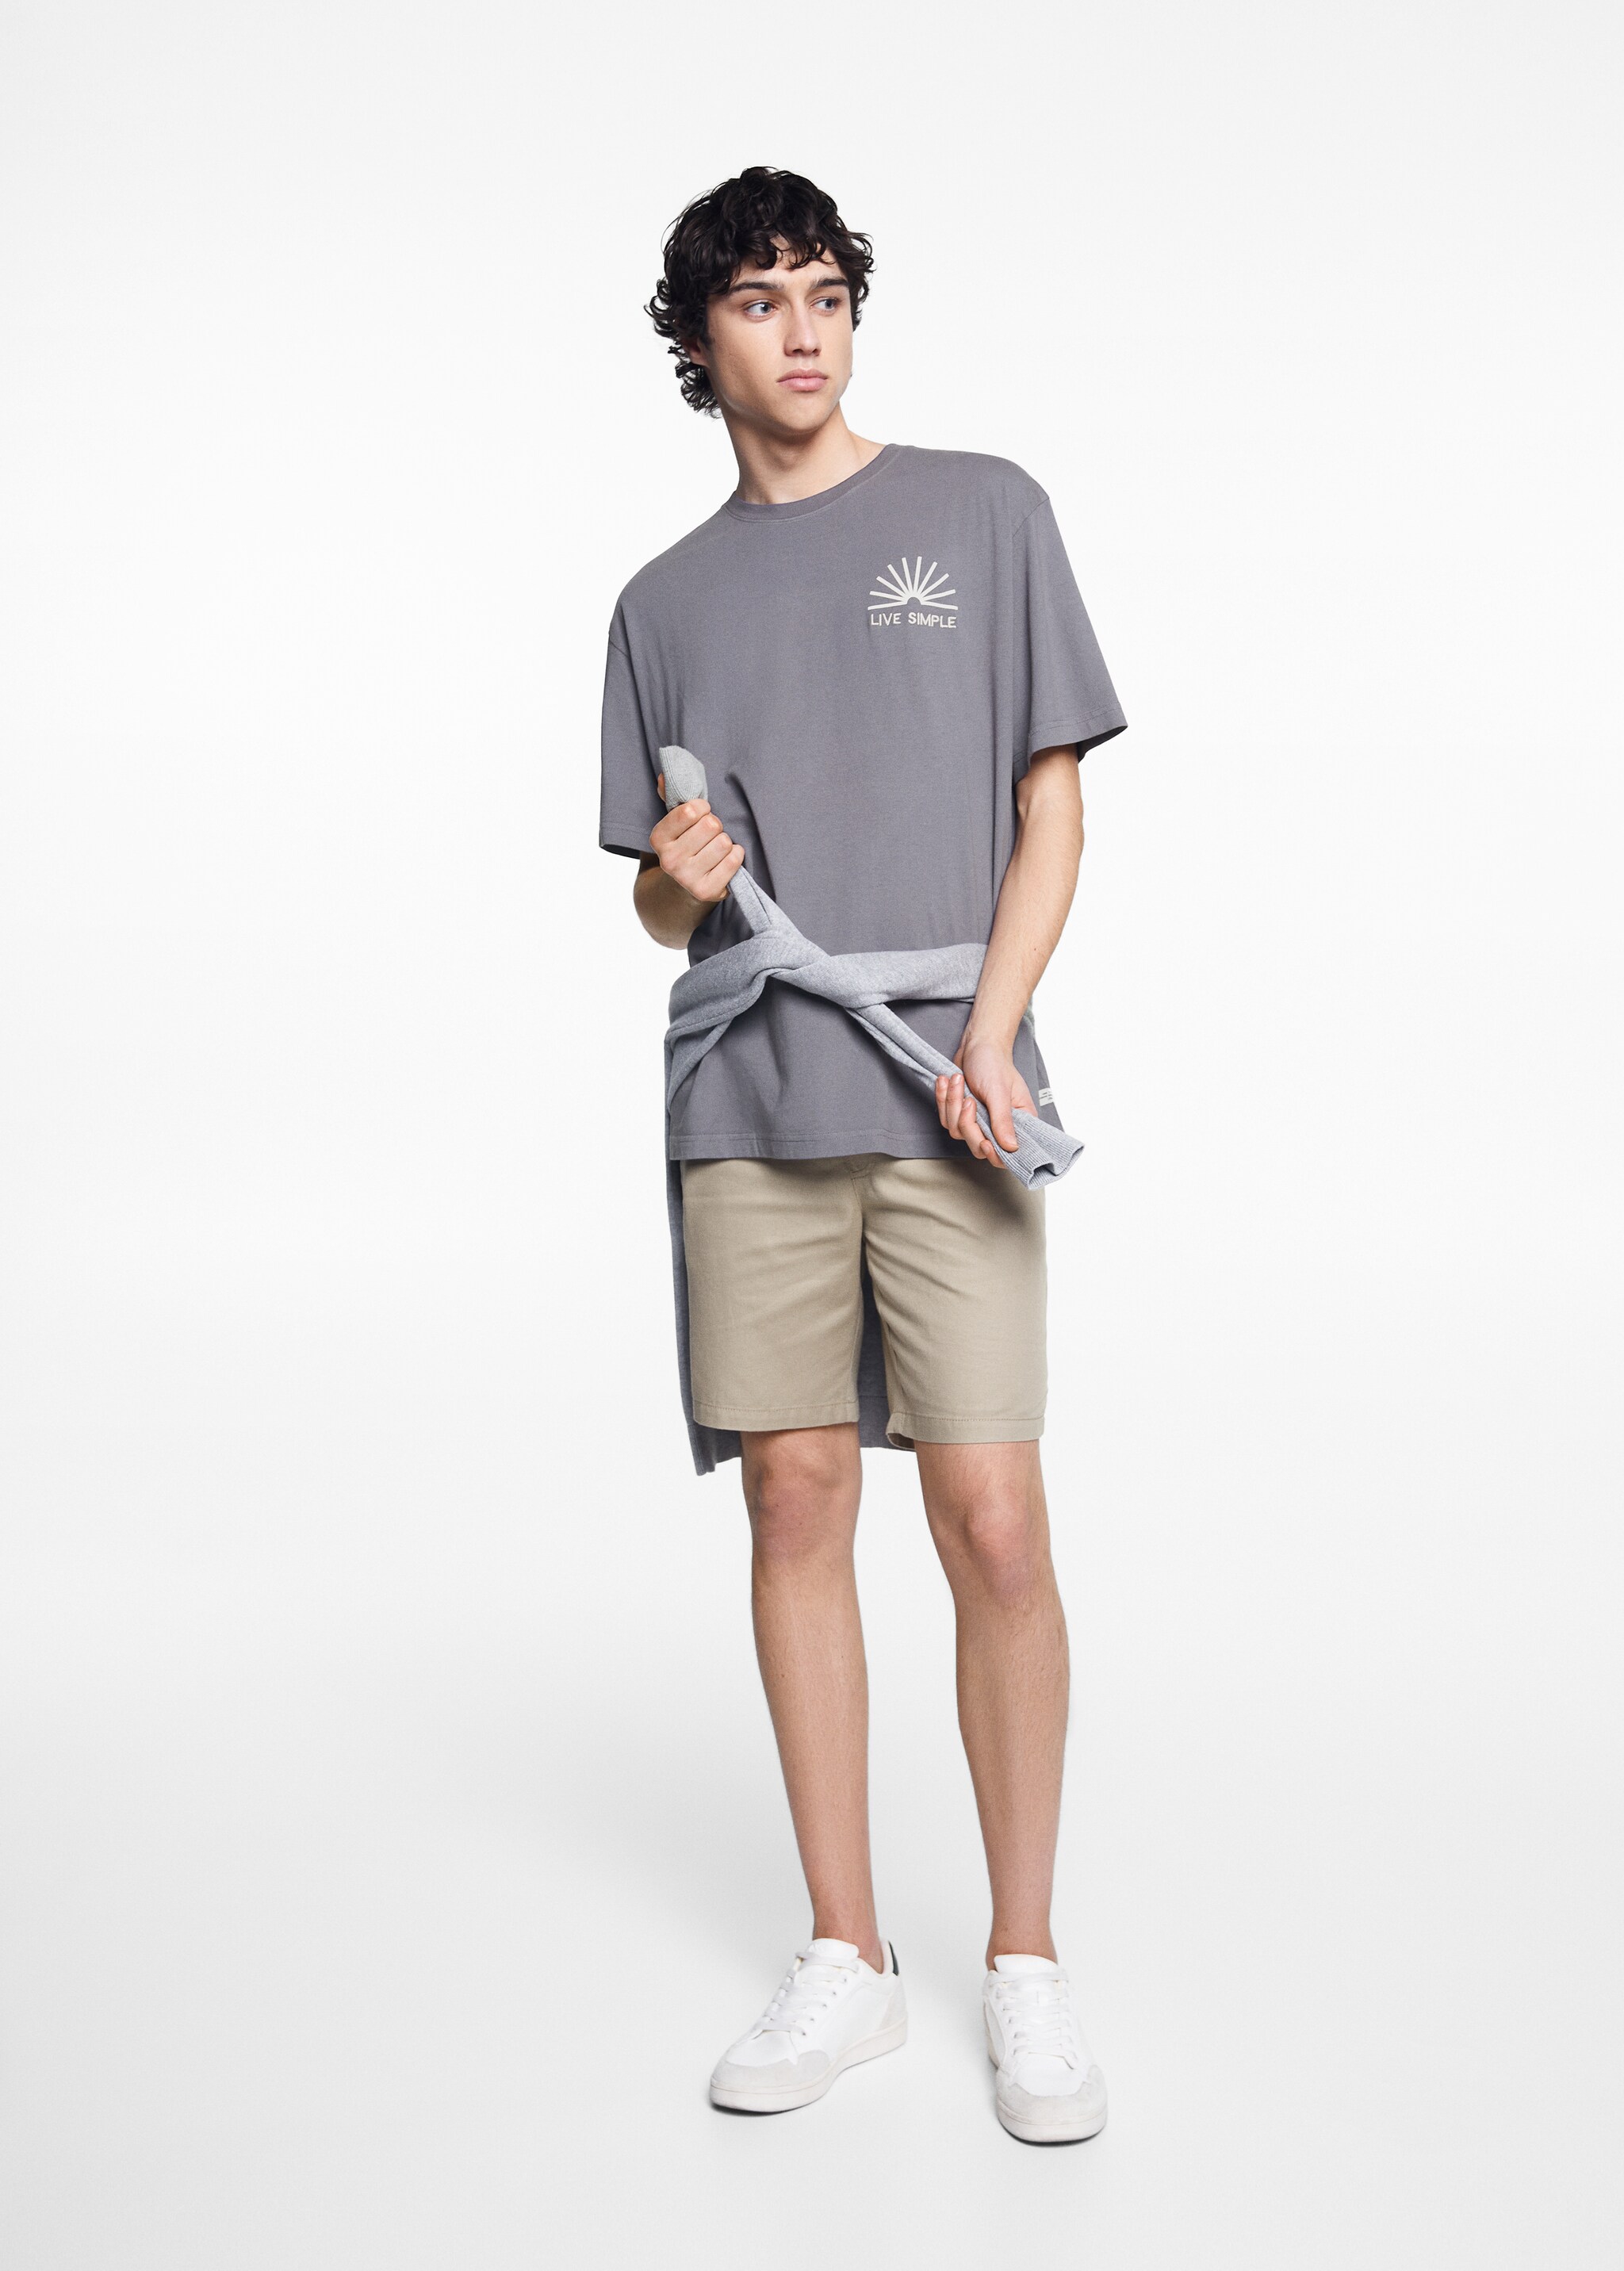 Camiseta estampada manga corta - Plano general